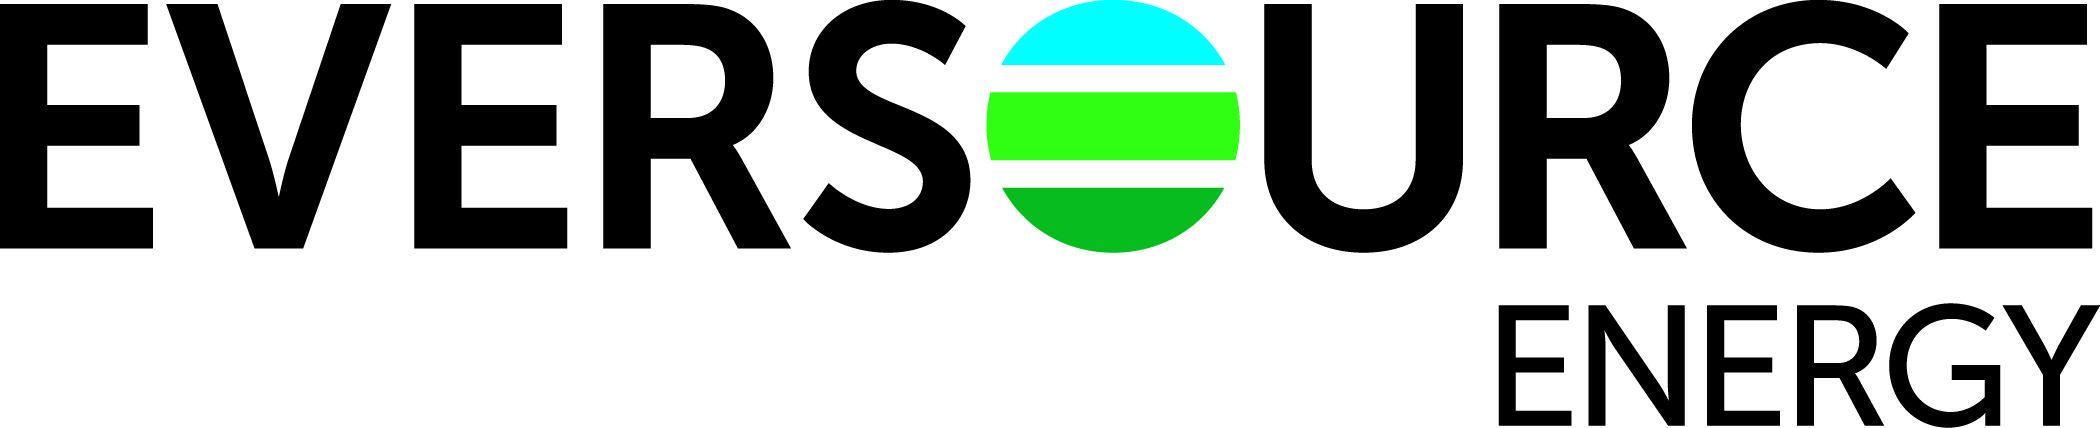 Eversource Logo - Eversource Logo